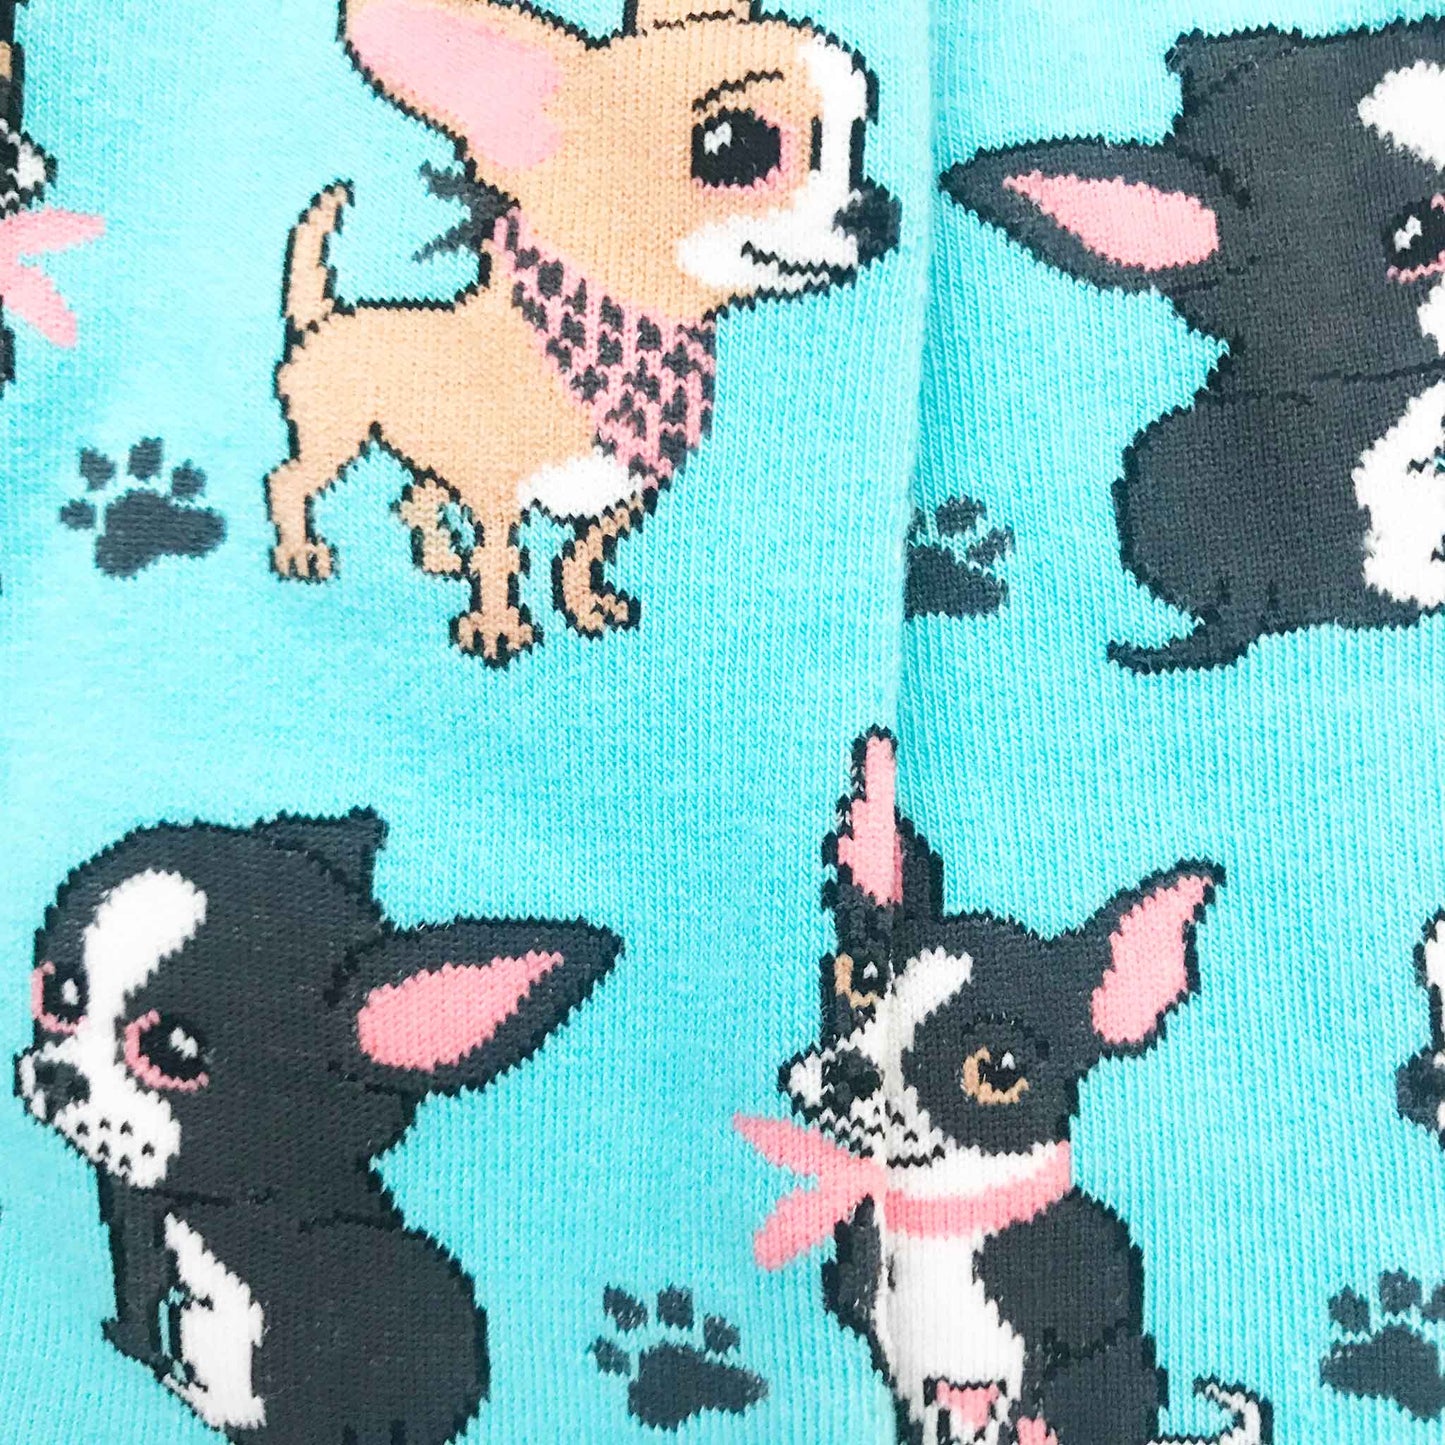 Chihuahua - Imagery Socks